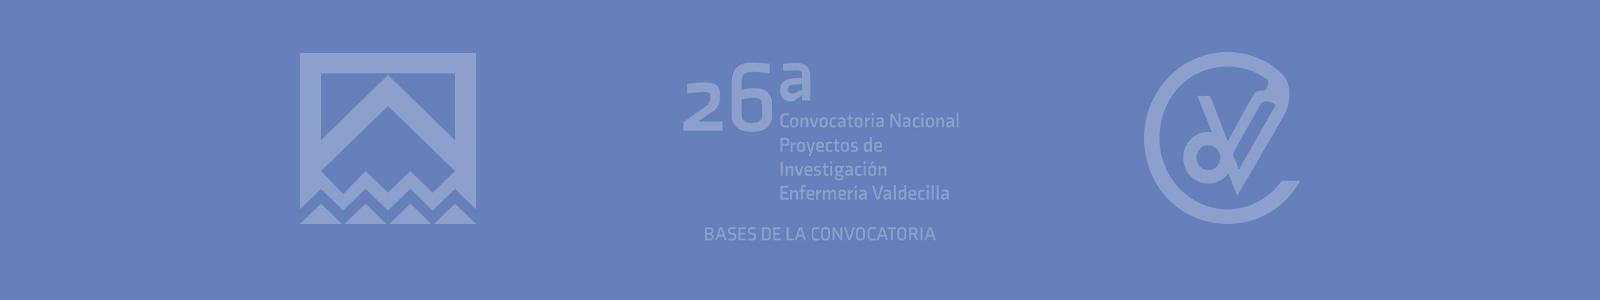 26 Edición Convocatoria Nacional Premio Investigación Enfermeria